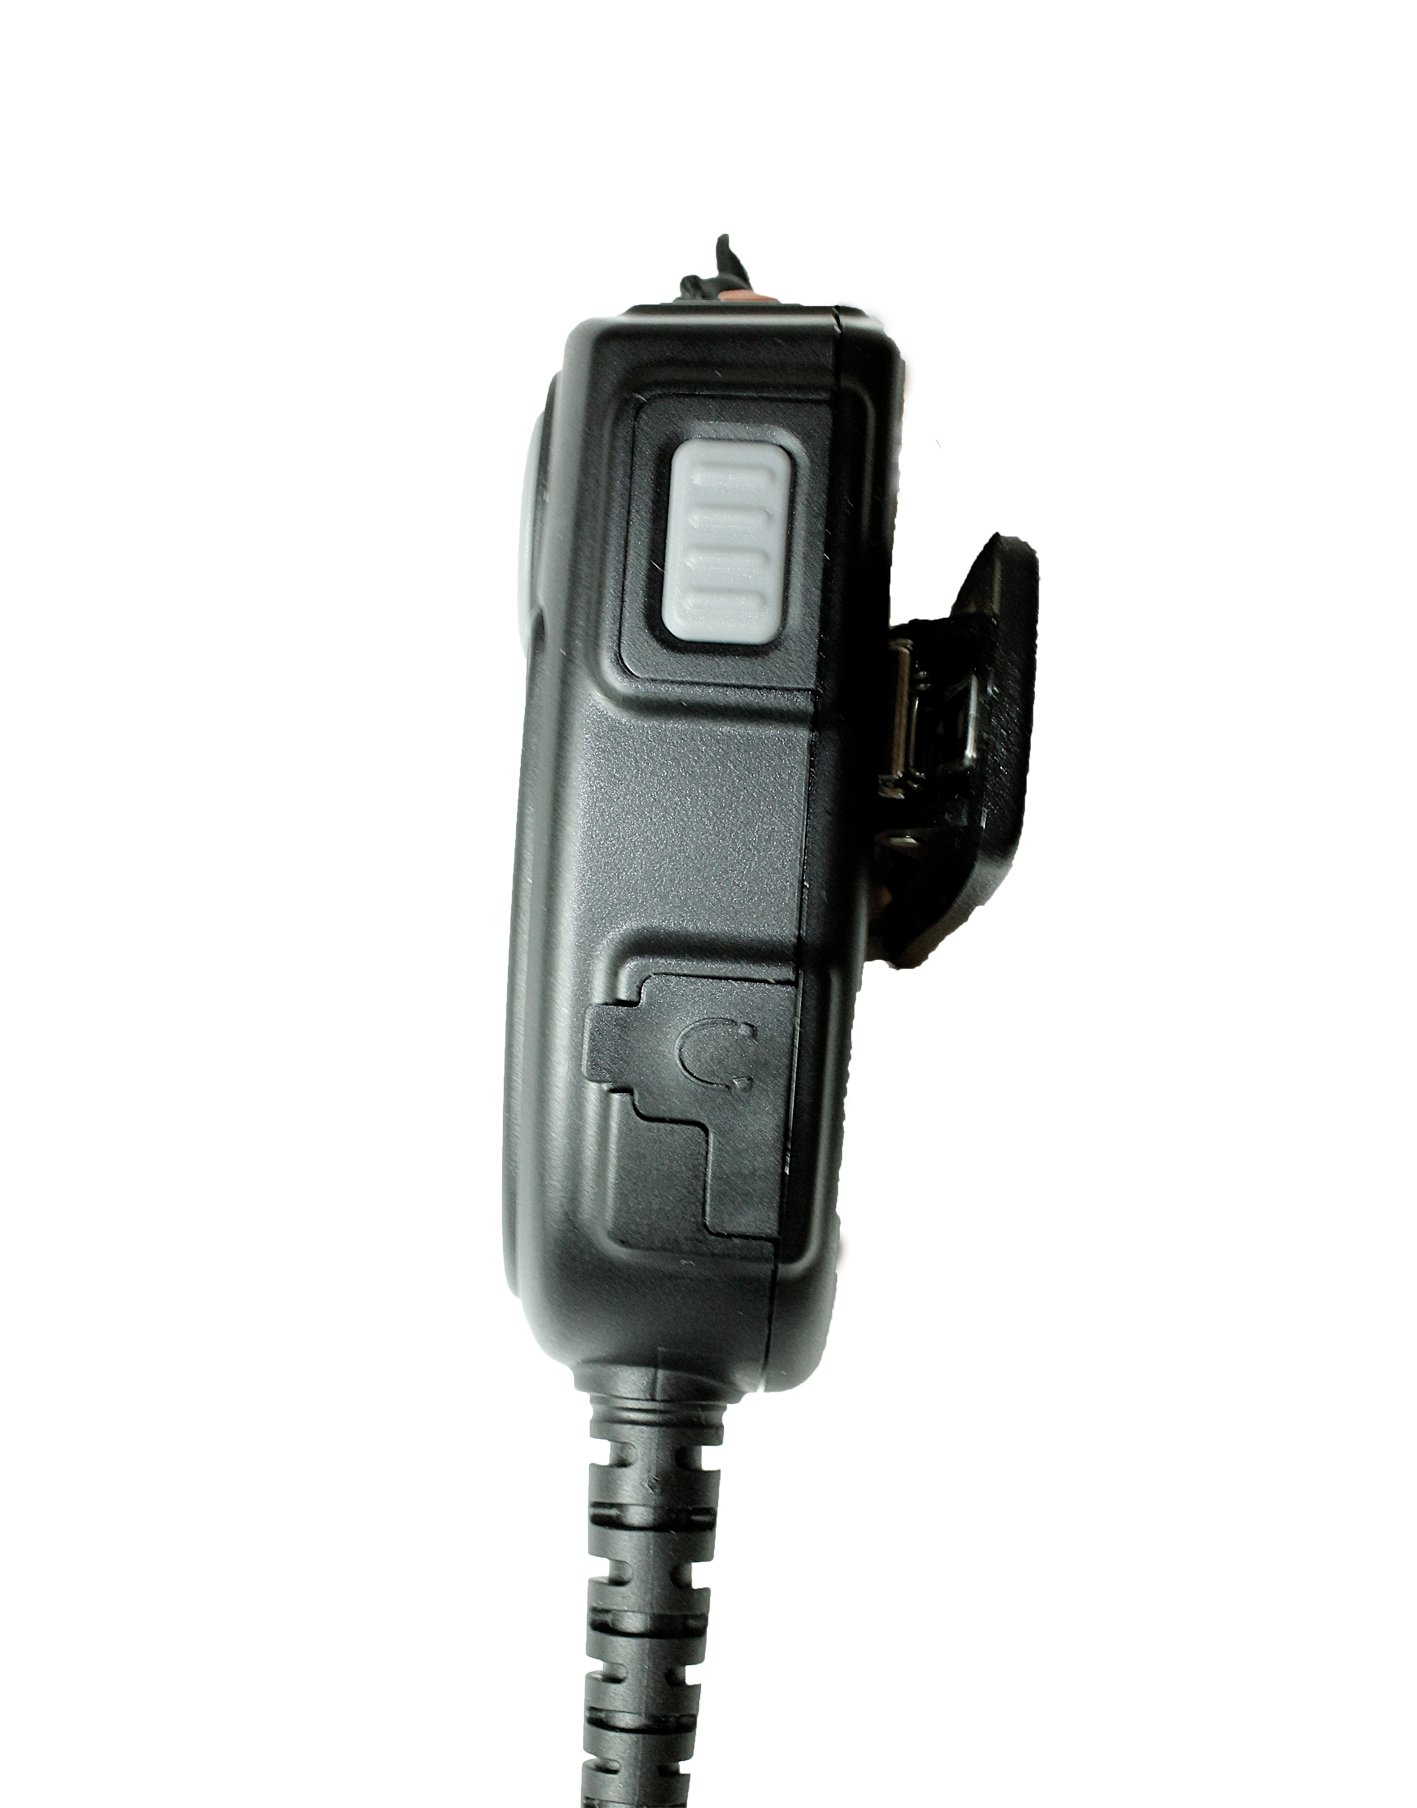 TITAN Lautsprechermikrofon MM20 mit Nexus 01 passend für Hytera PD705, PD785, PT580